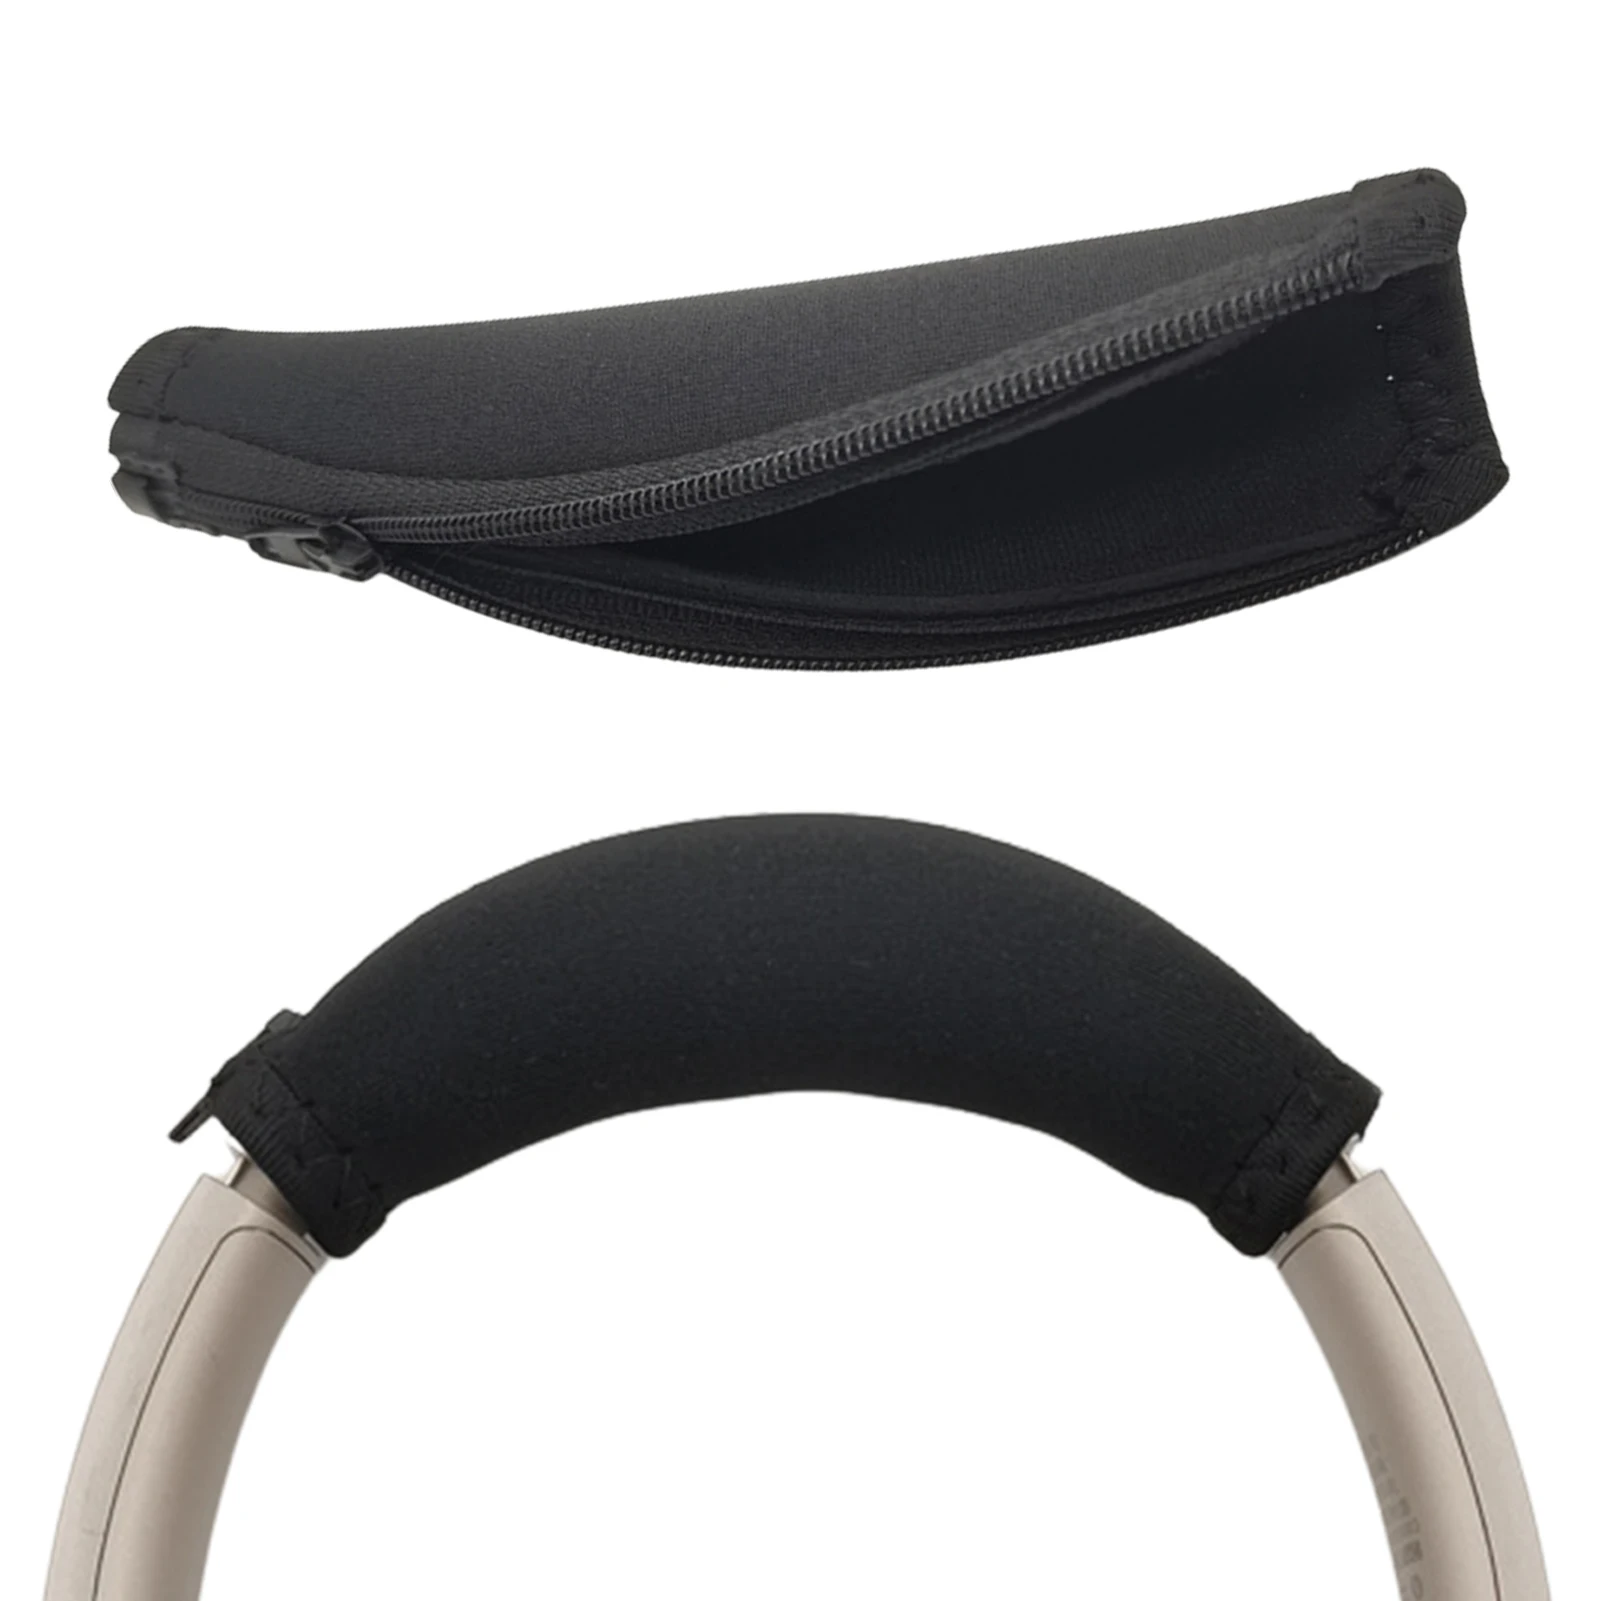 Headphone Headband ForSONY 1000XM2 1000XM3 M4 Headphone Head Beam Pad Headband Protective Head Band Replace Cover Head Band